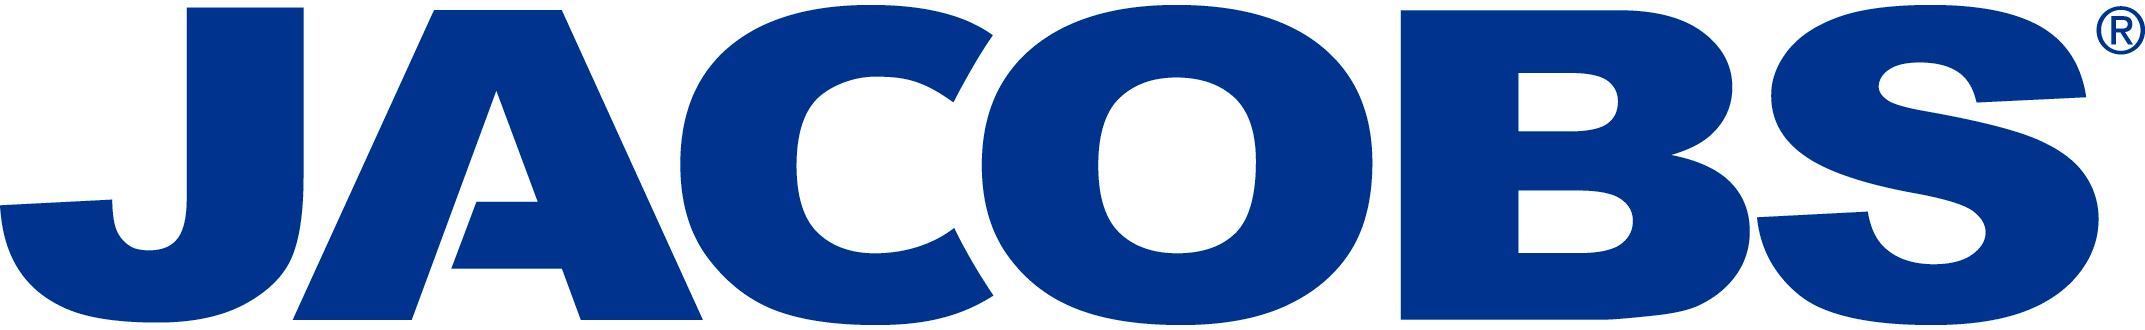 Jacobs Logo Blue